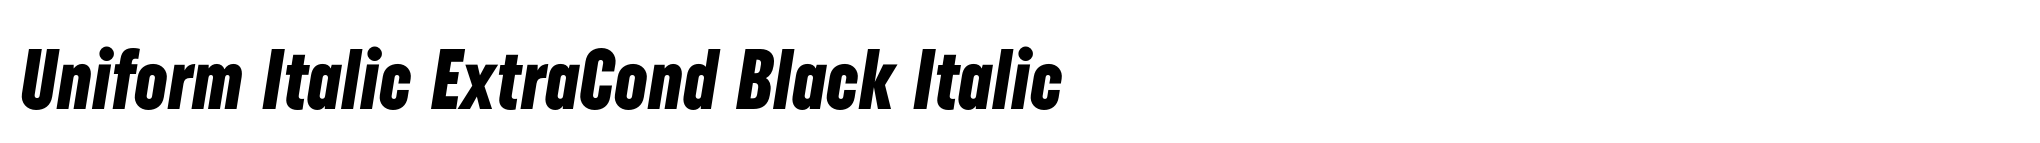 Uniform Italic ExtraCond Black Italic image